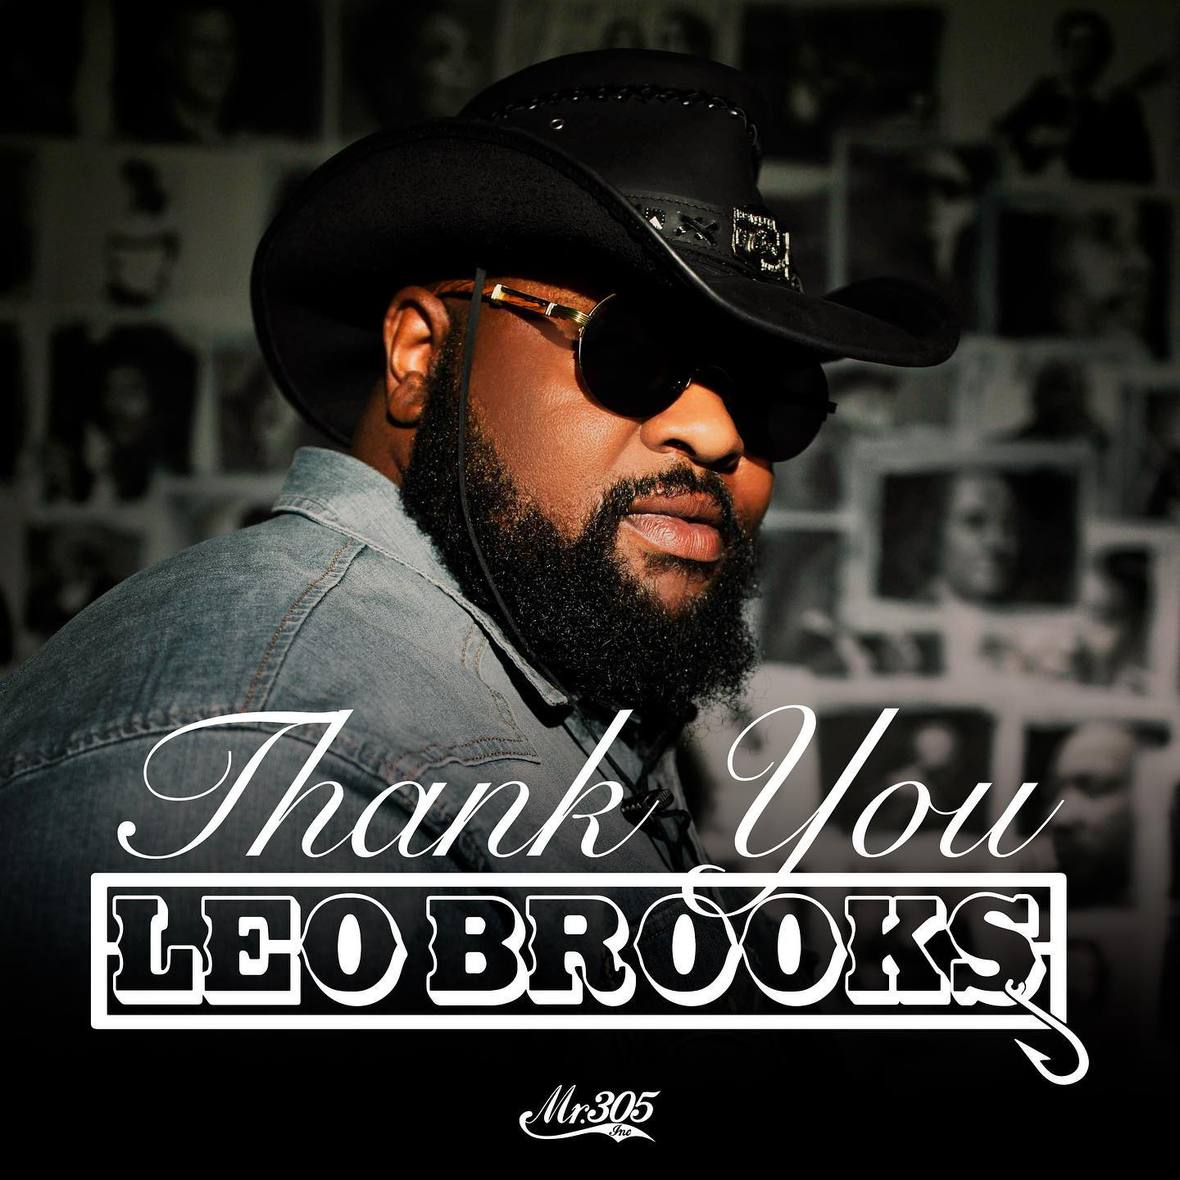 LEO BROOKS drops debut single “THANK YOU” via Mr. 305 Records